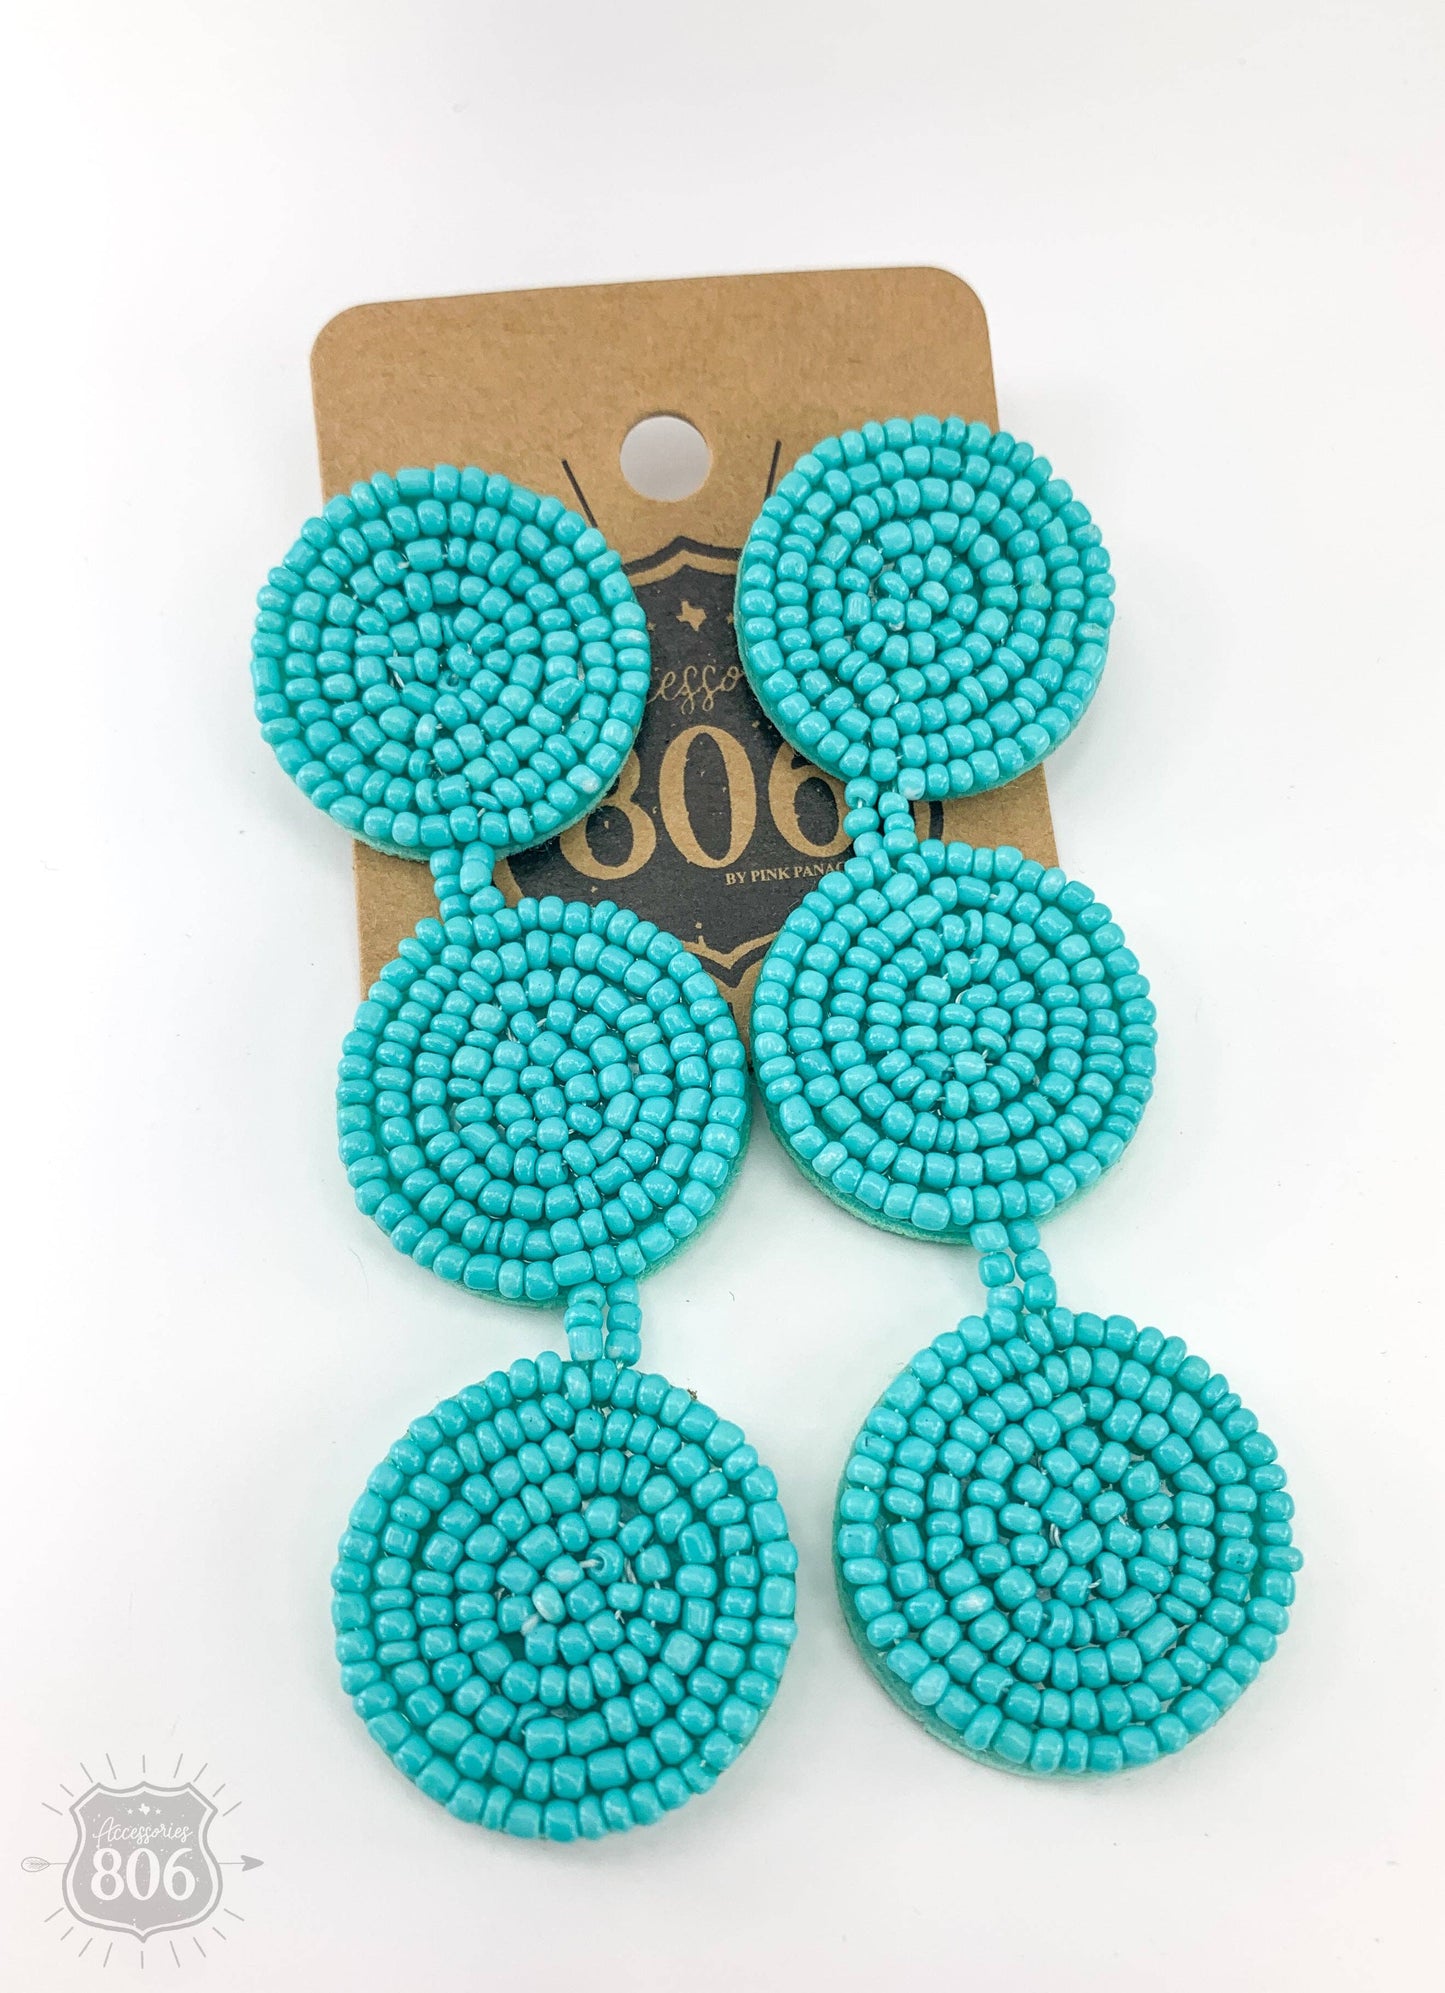 Triple circle seed bead earring